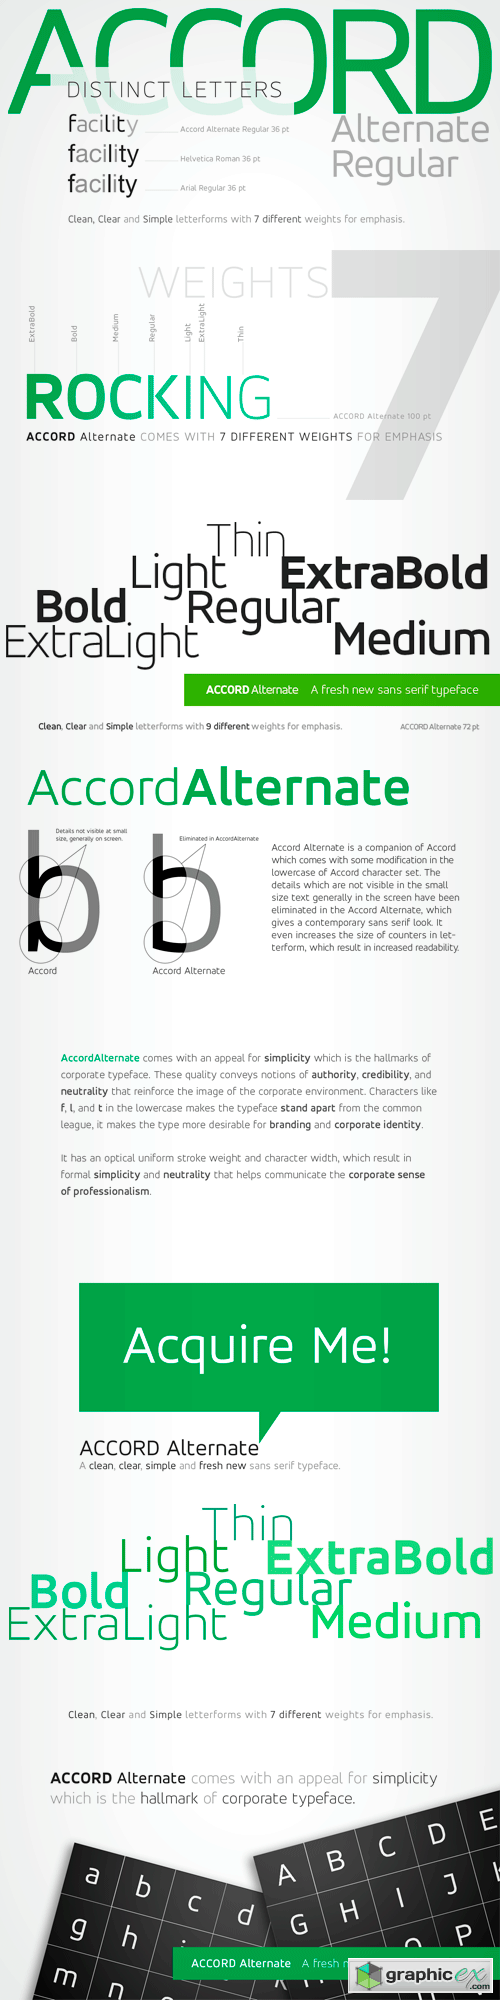 Accord Alternate Font Family.epub